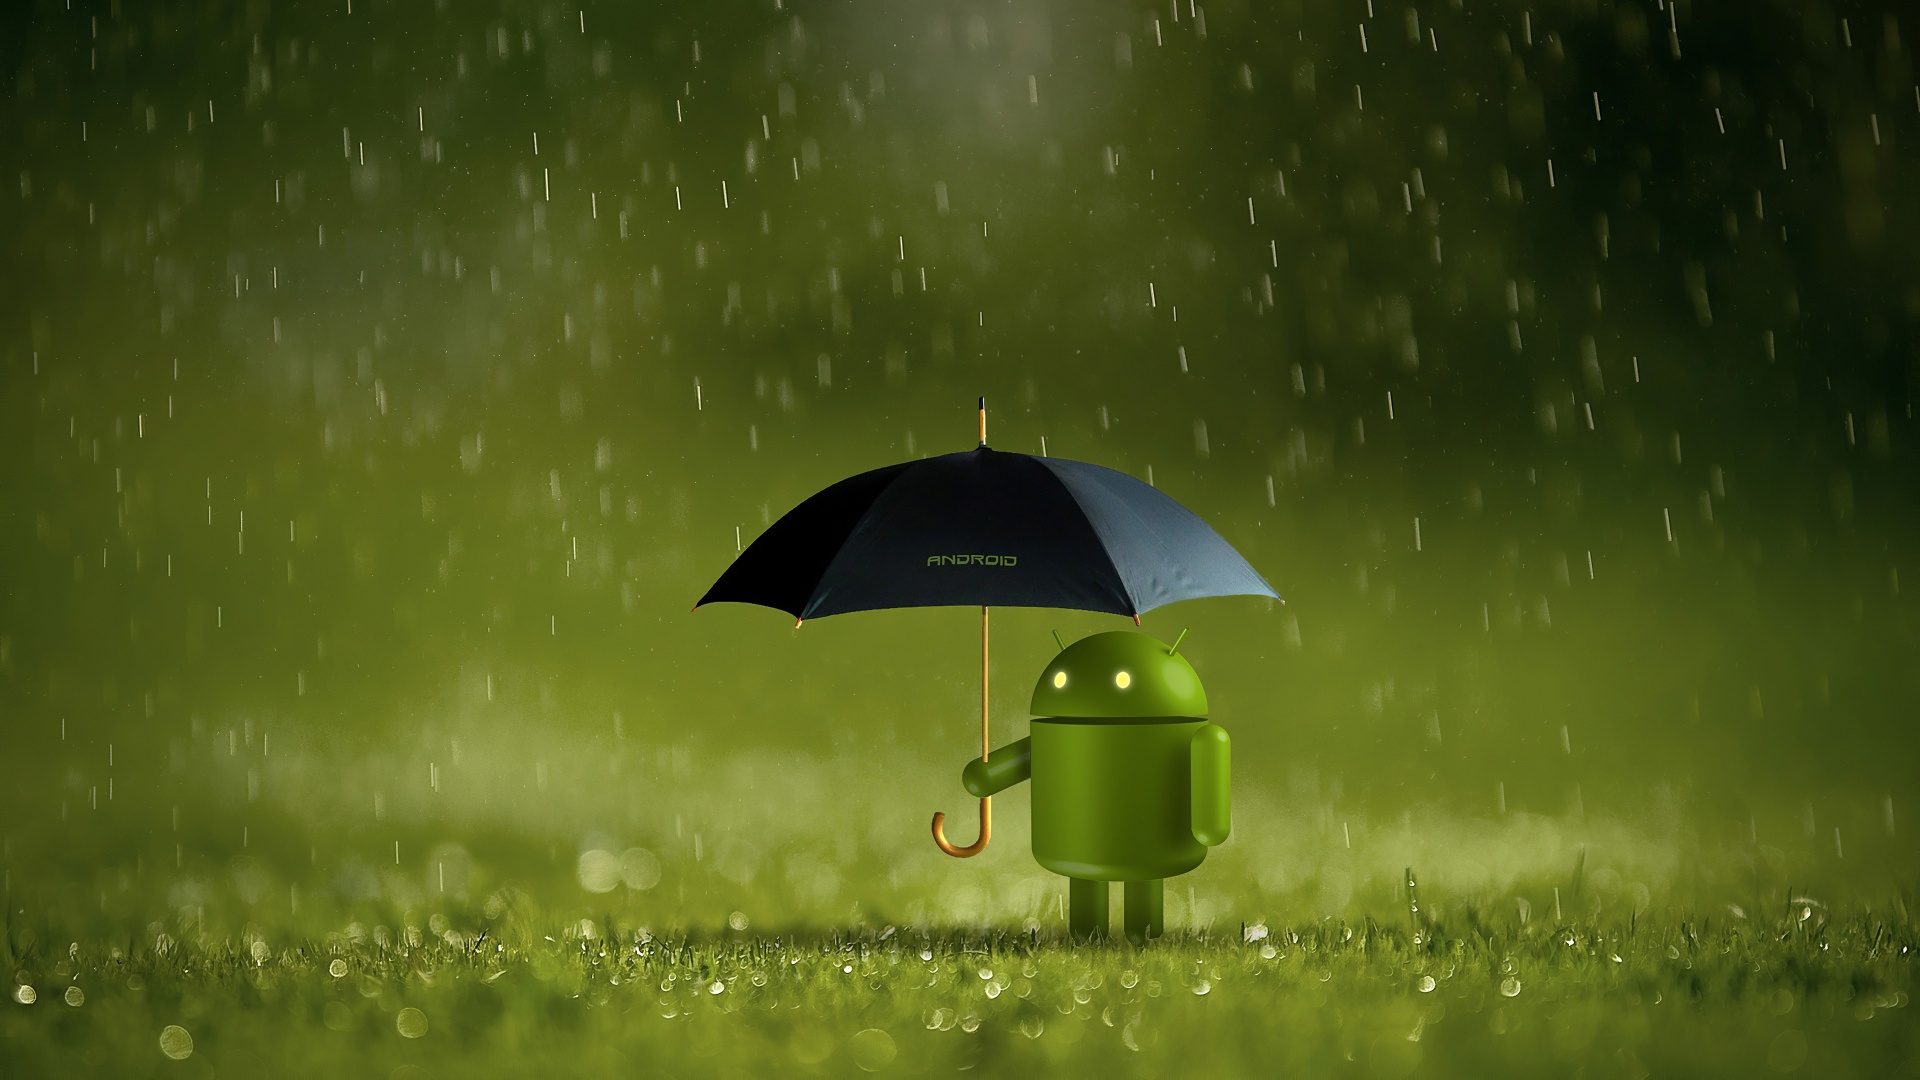 Android logo 4K Wallpaper, Android robot, Umbrella, Rain, Green